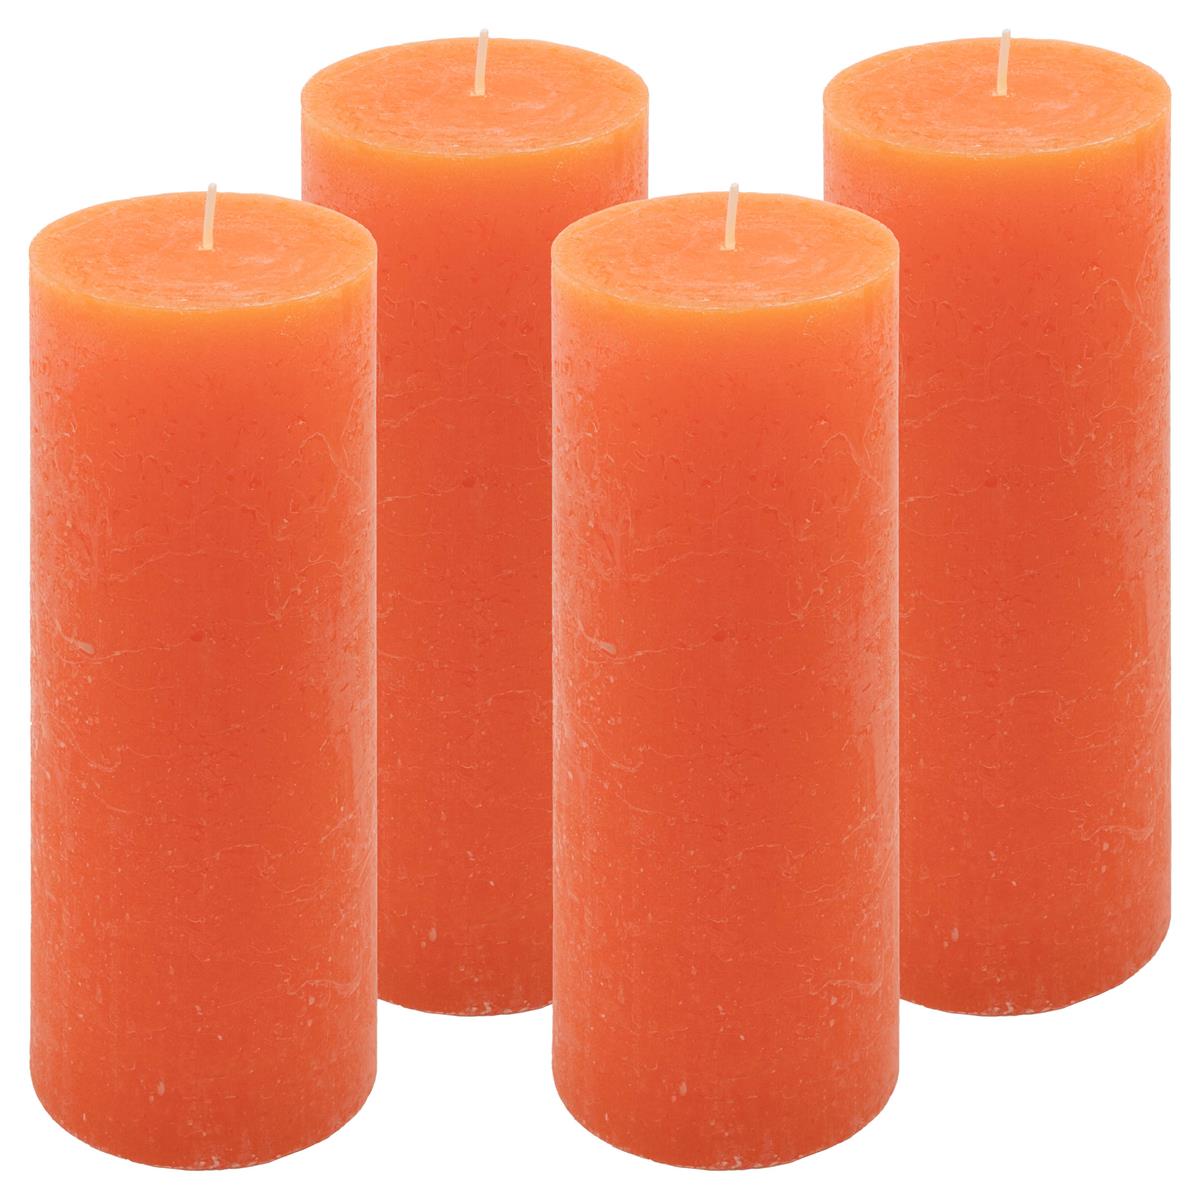 4er Set Rustik-Kerzen orange Höhe 20 cm Ø 7,5 cm lange Brenndauer Rund-Kerze